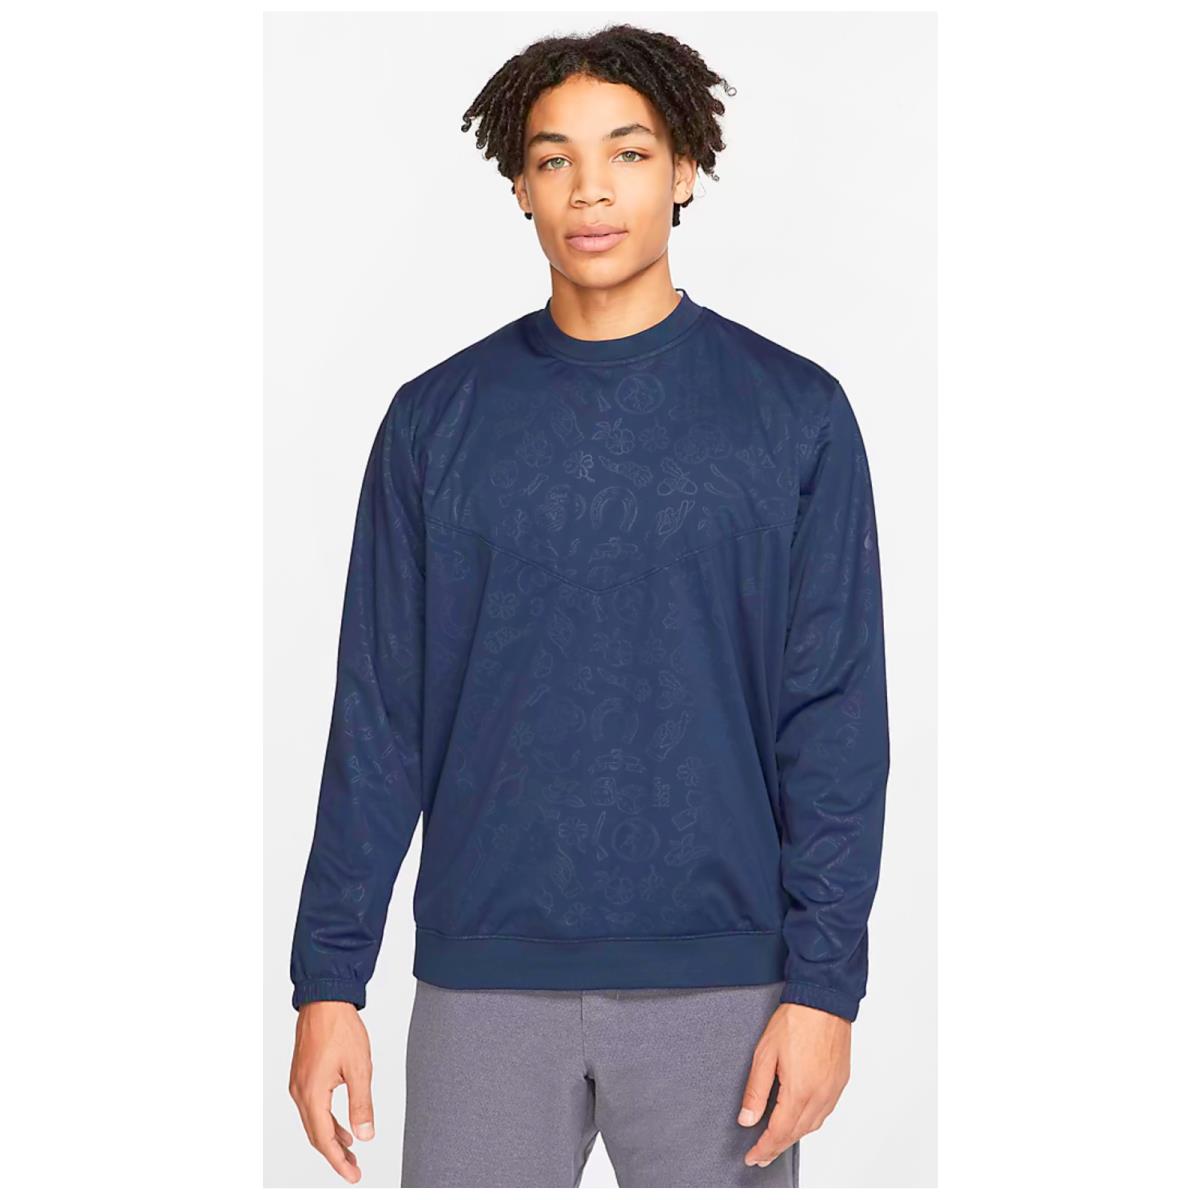 Nike Men s Dri-fit Golf Shield Weather Resistant Sweatshirt Obsidian Blue Size M